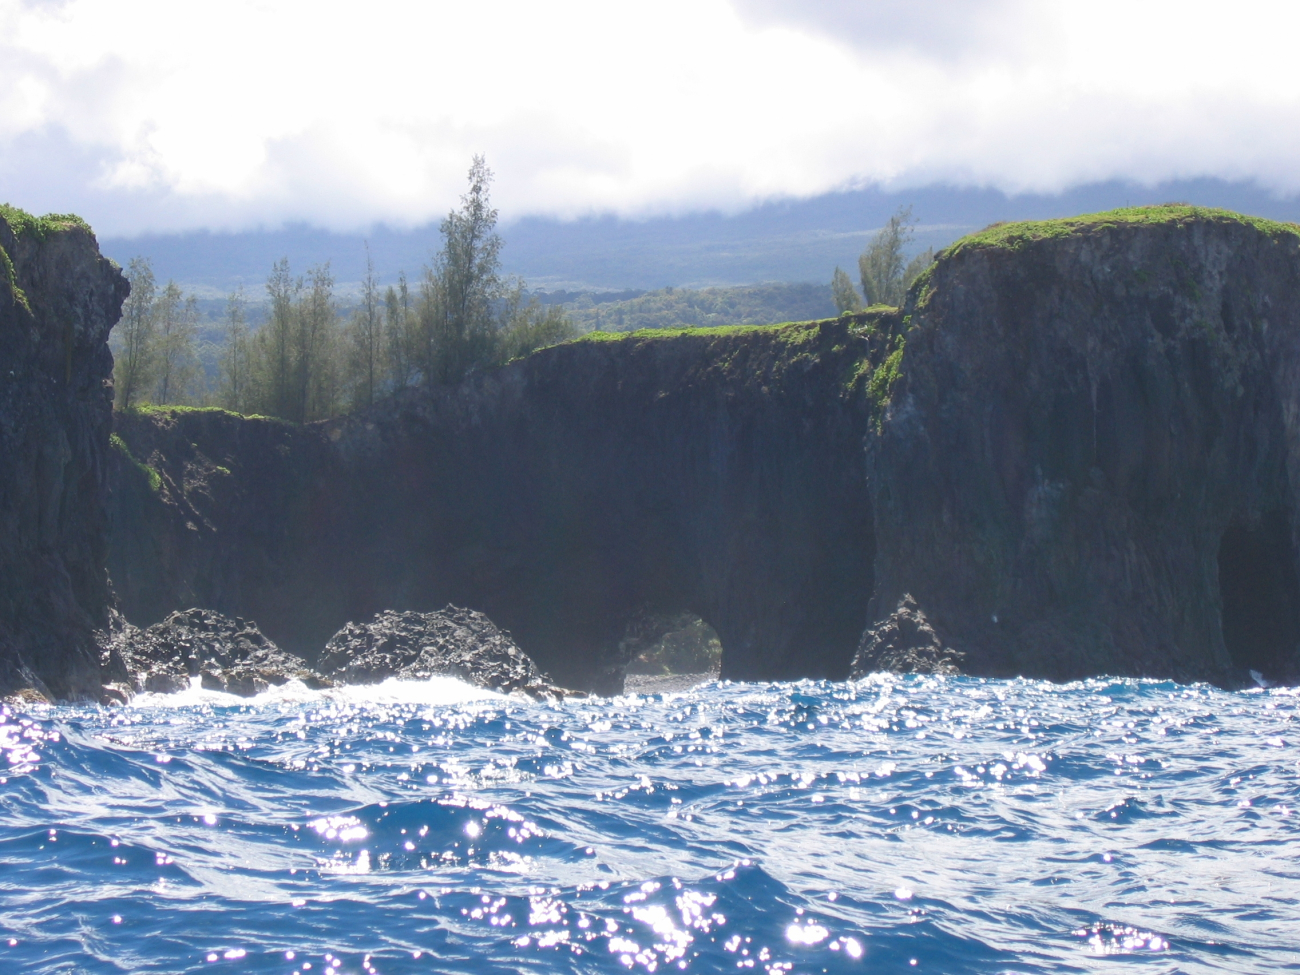 Coast of eastern Maui